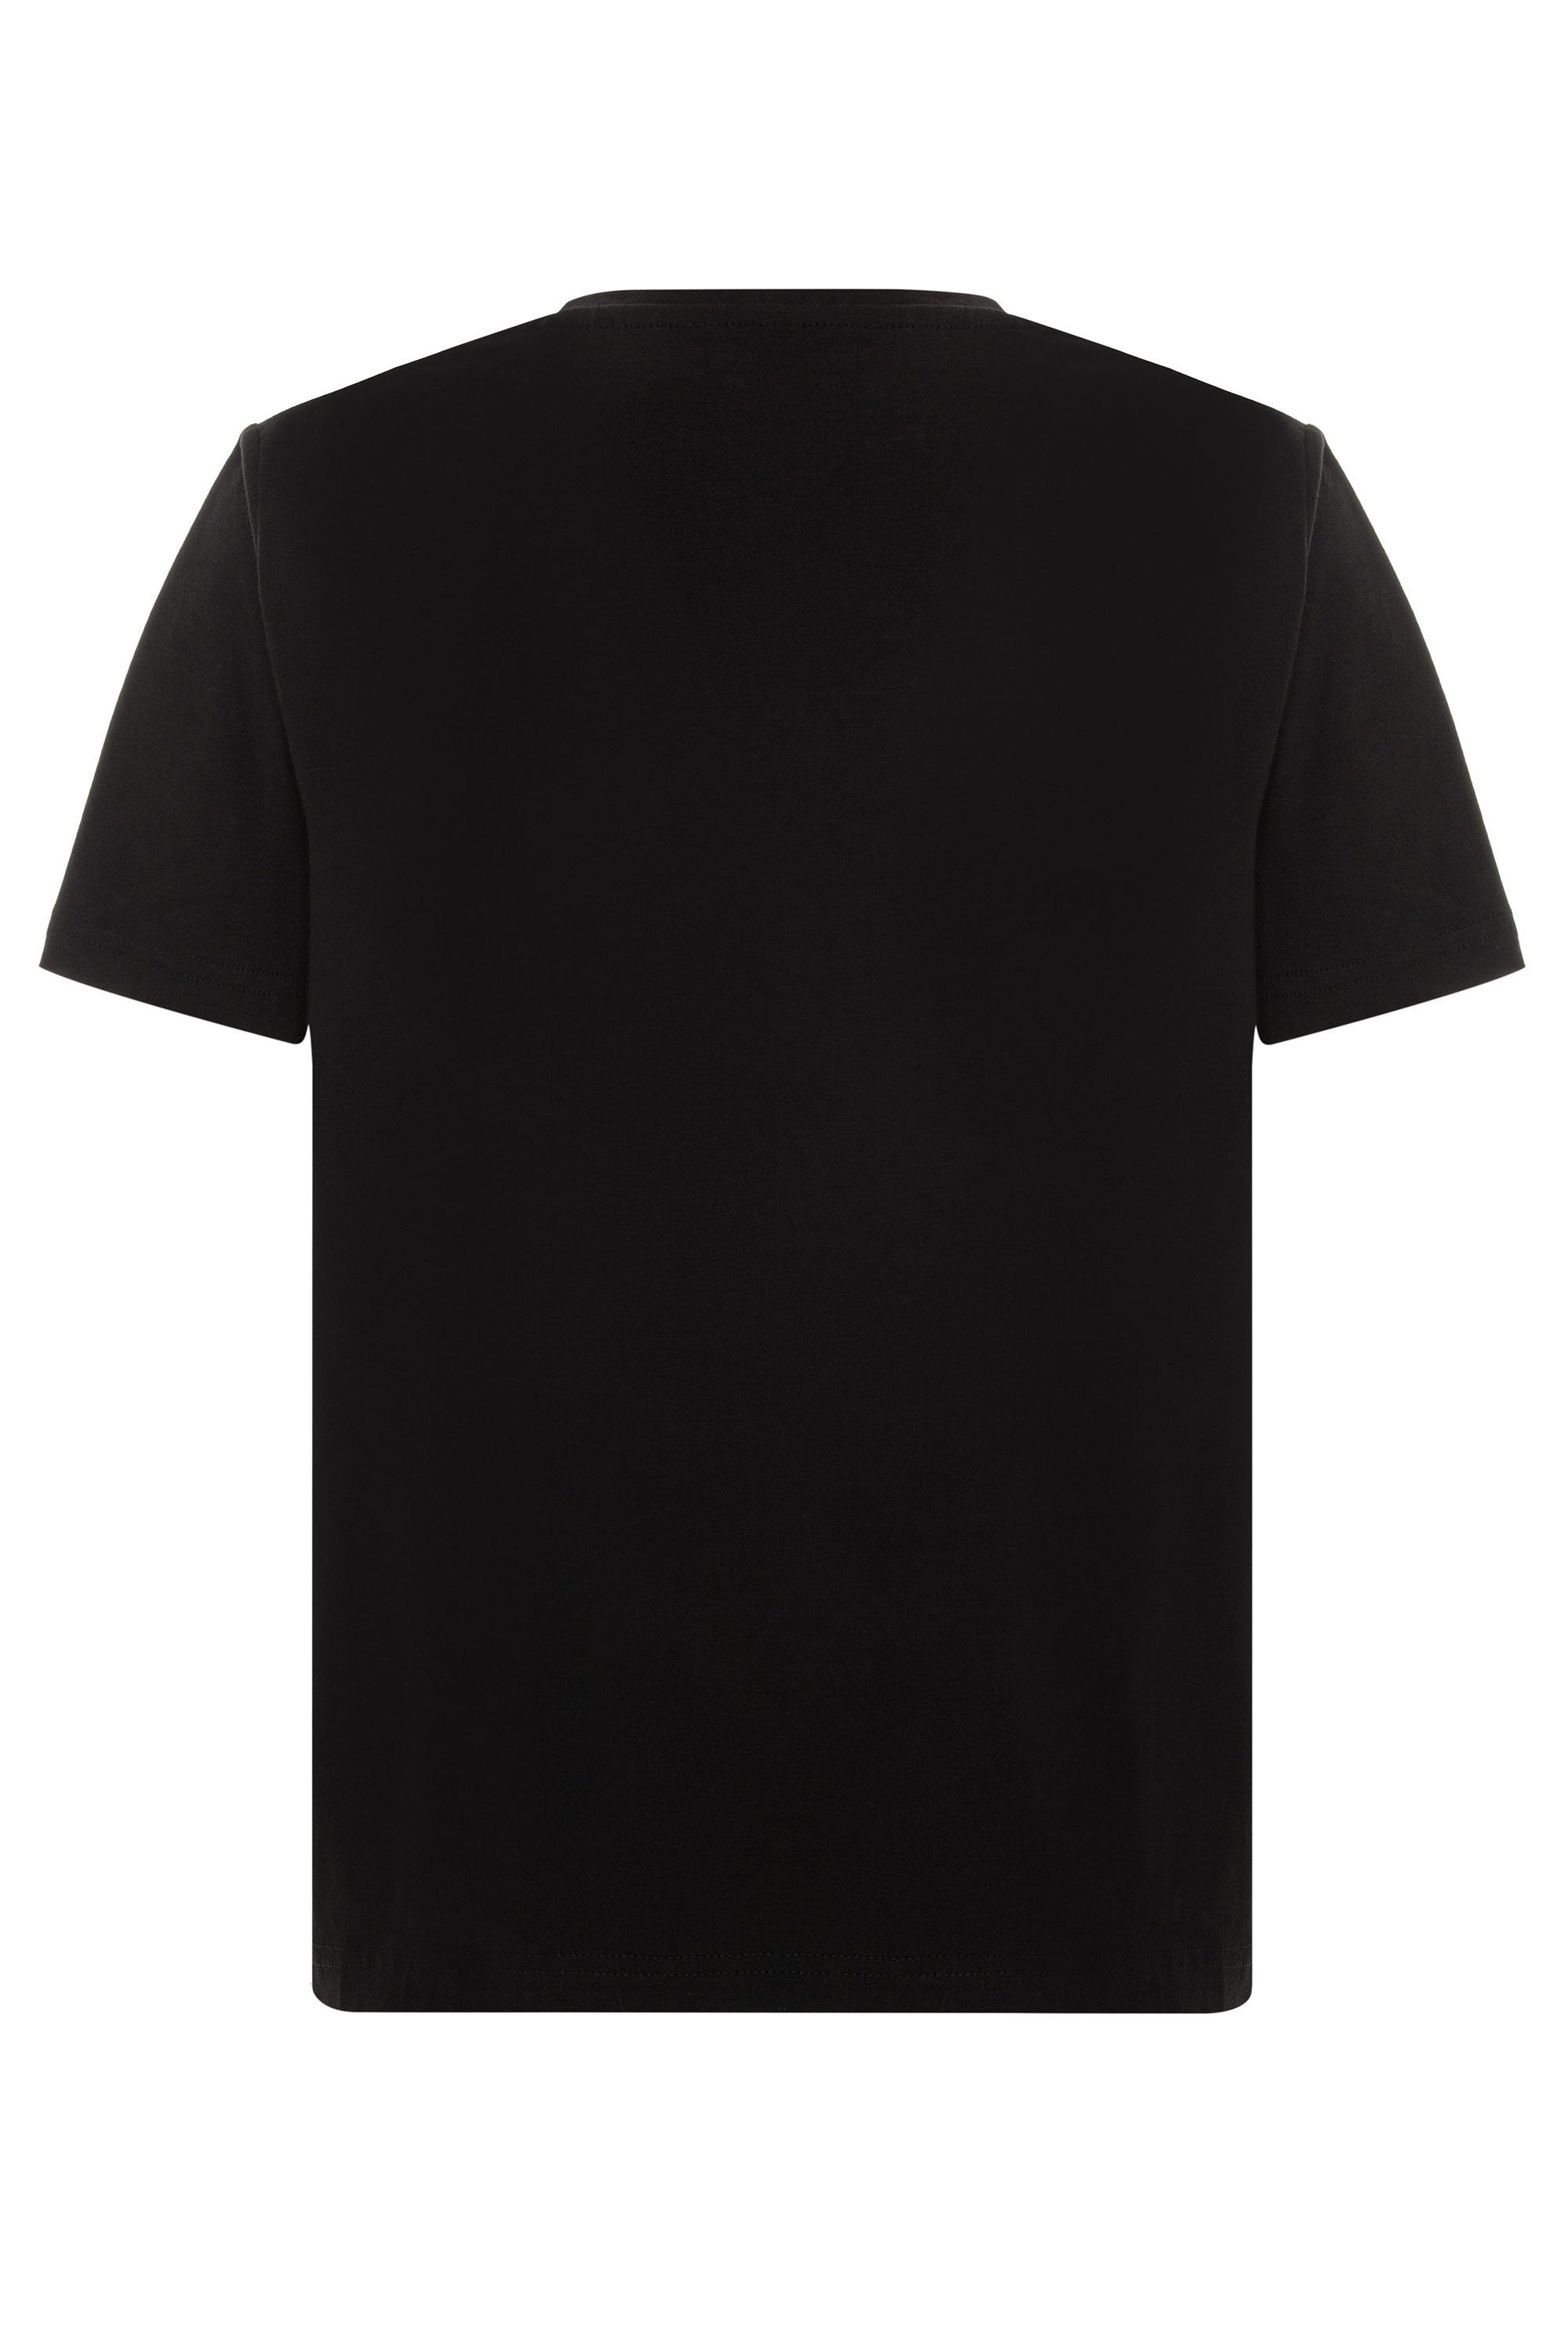 Cipo & Baxx coolem schwarz-weiß Print mit T-Shirt